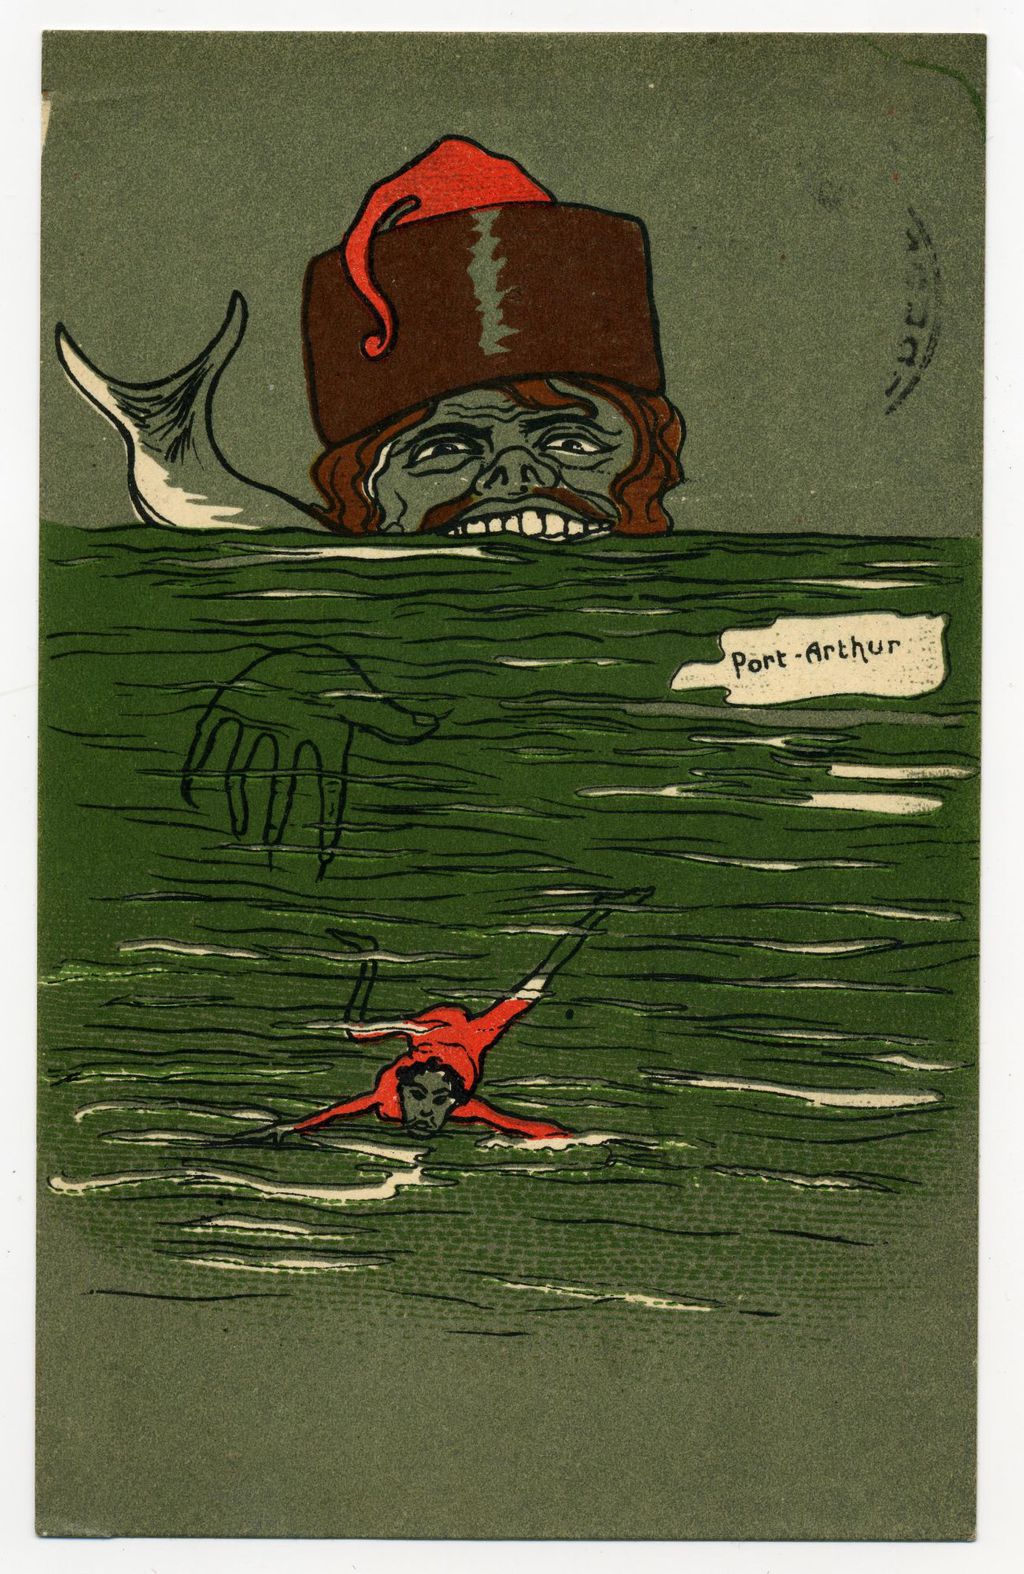 Postkarte: "Port Arthur" zum Russisch-Japanischen Krieg, 1904